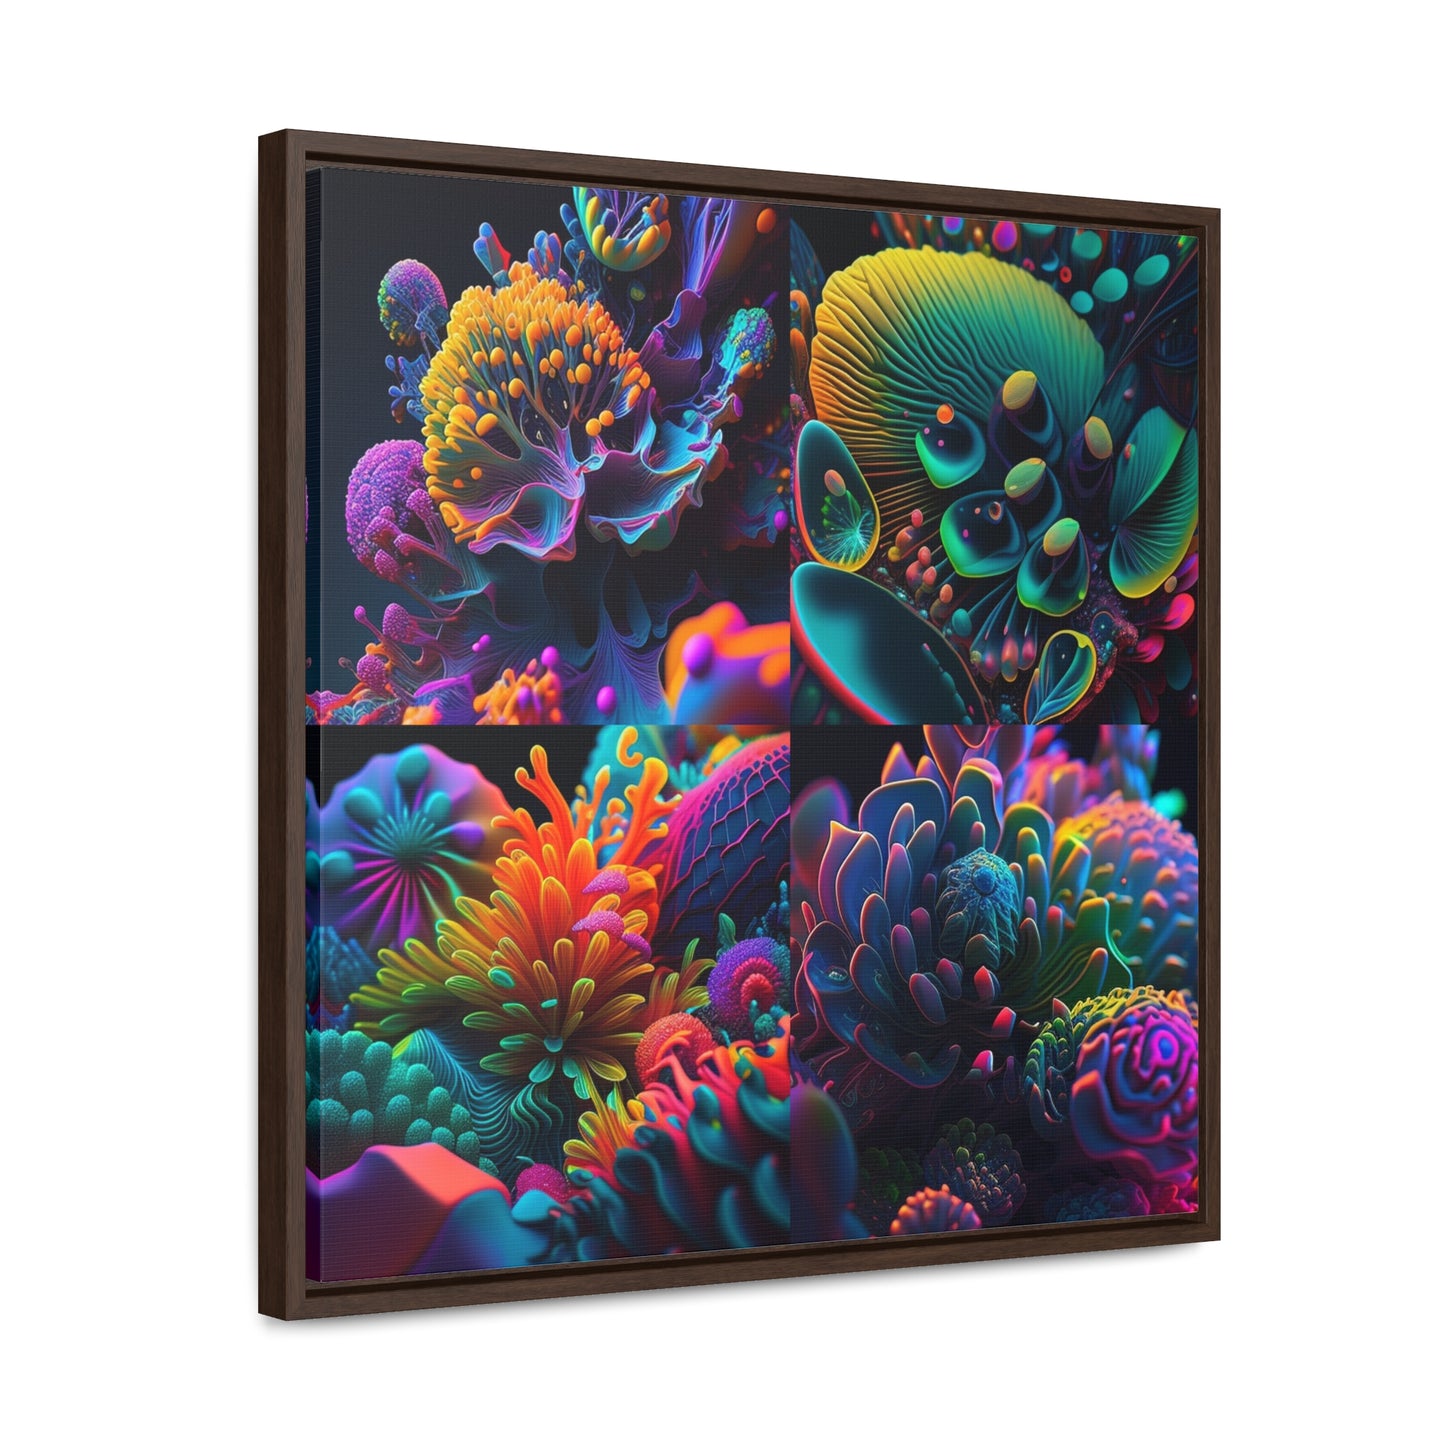 Gallery Canvas Wraps, Square Frame Ocean Life Macro 5